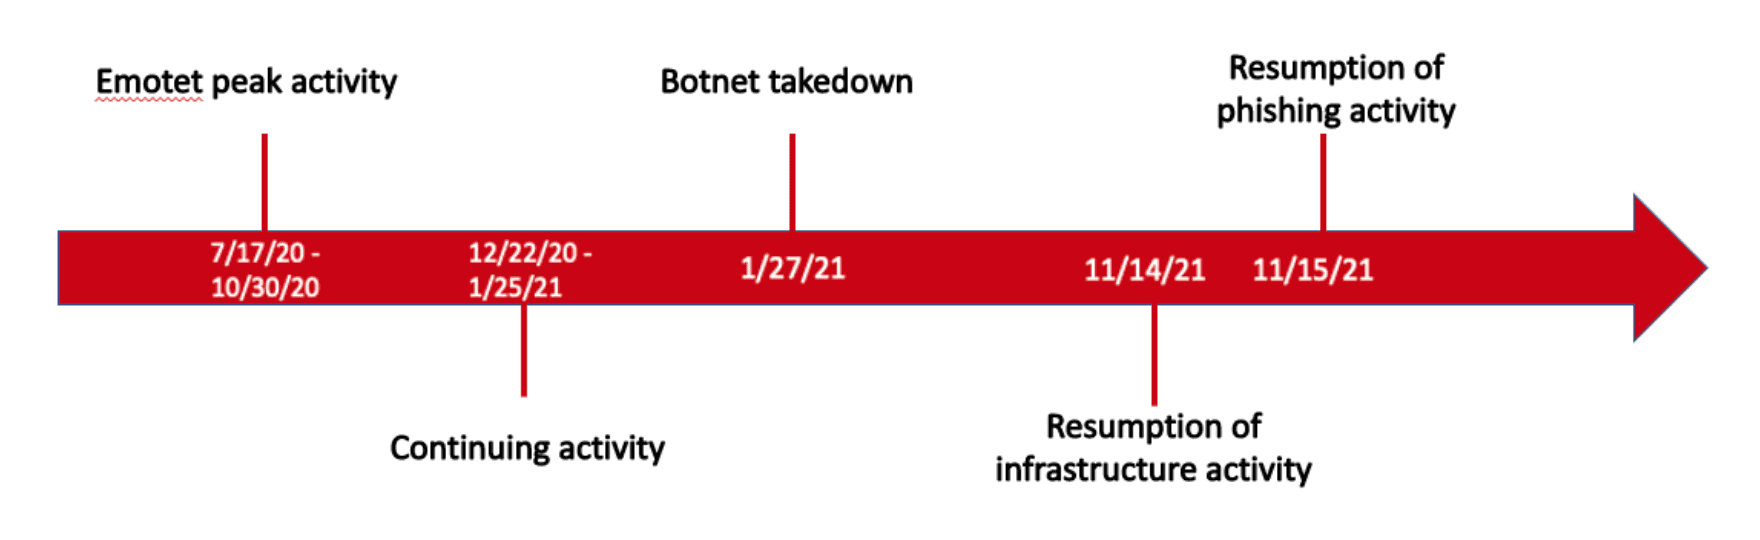 Timeline of Emotnet’s resurgence